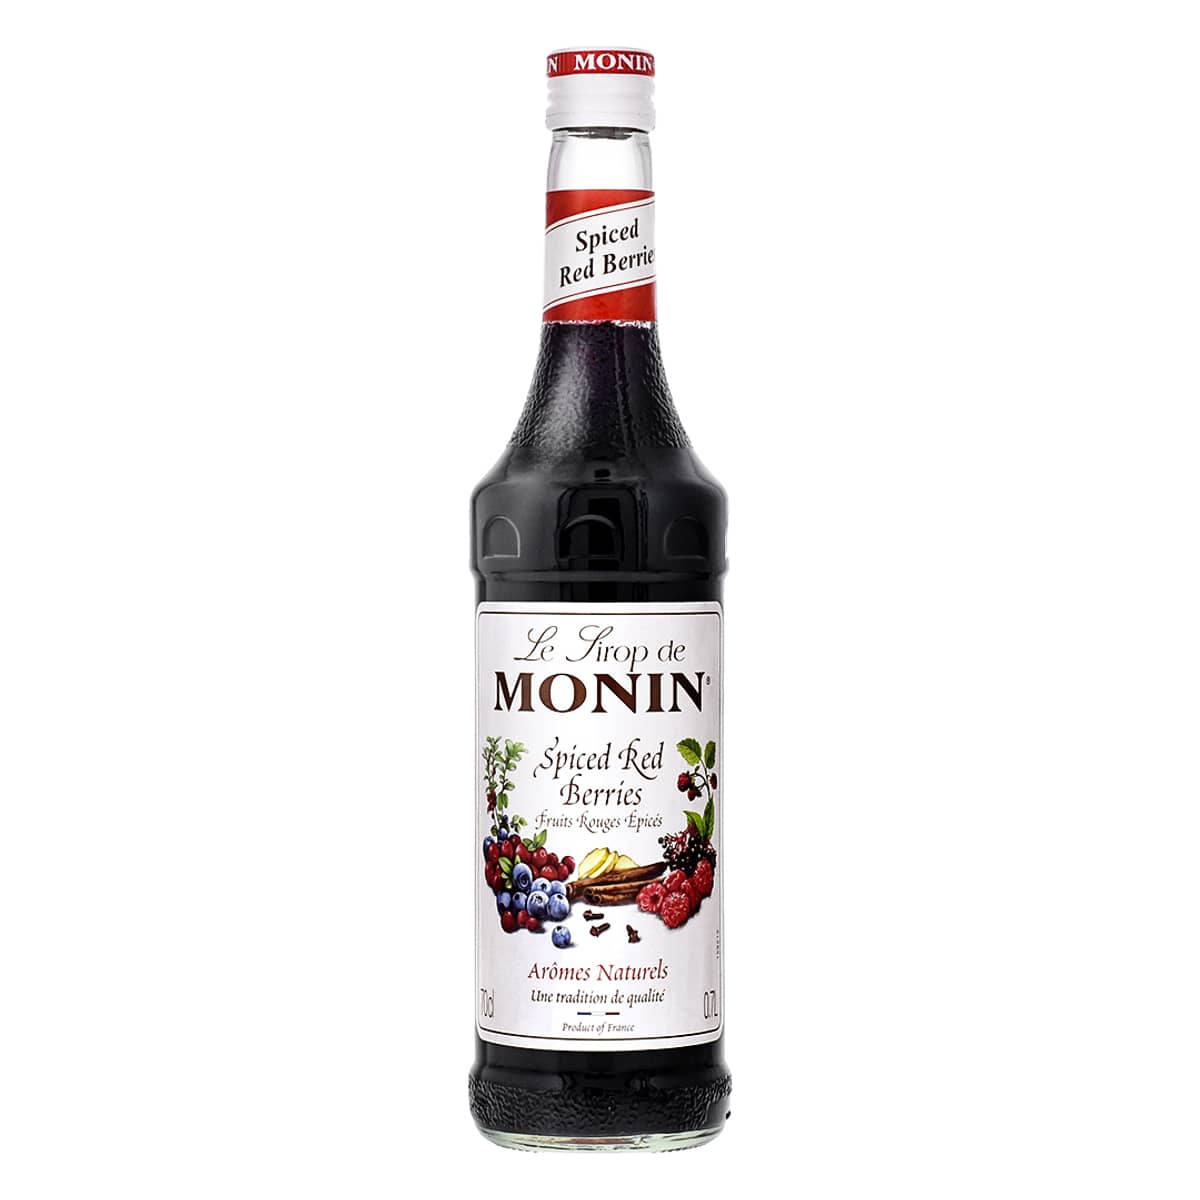 Where to buy Monin Sirop Vanille -Vanilla Syrup, France